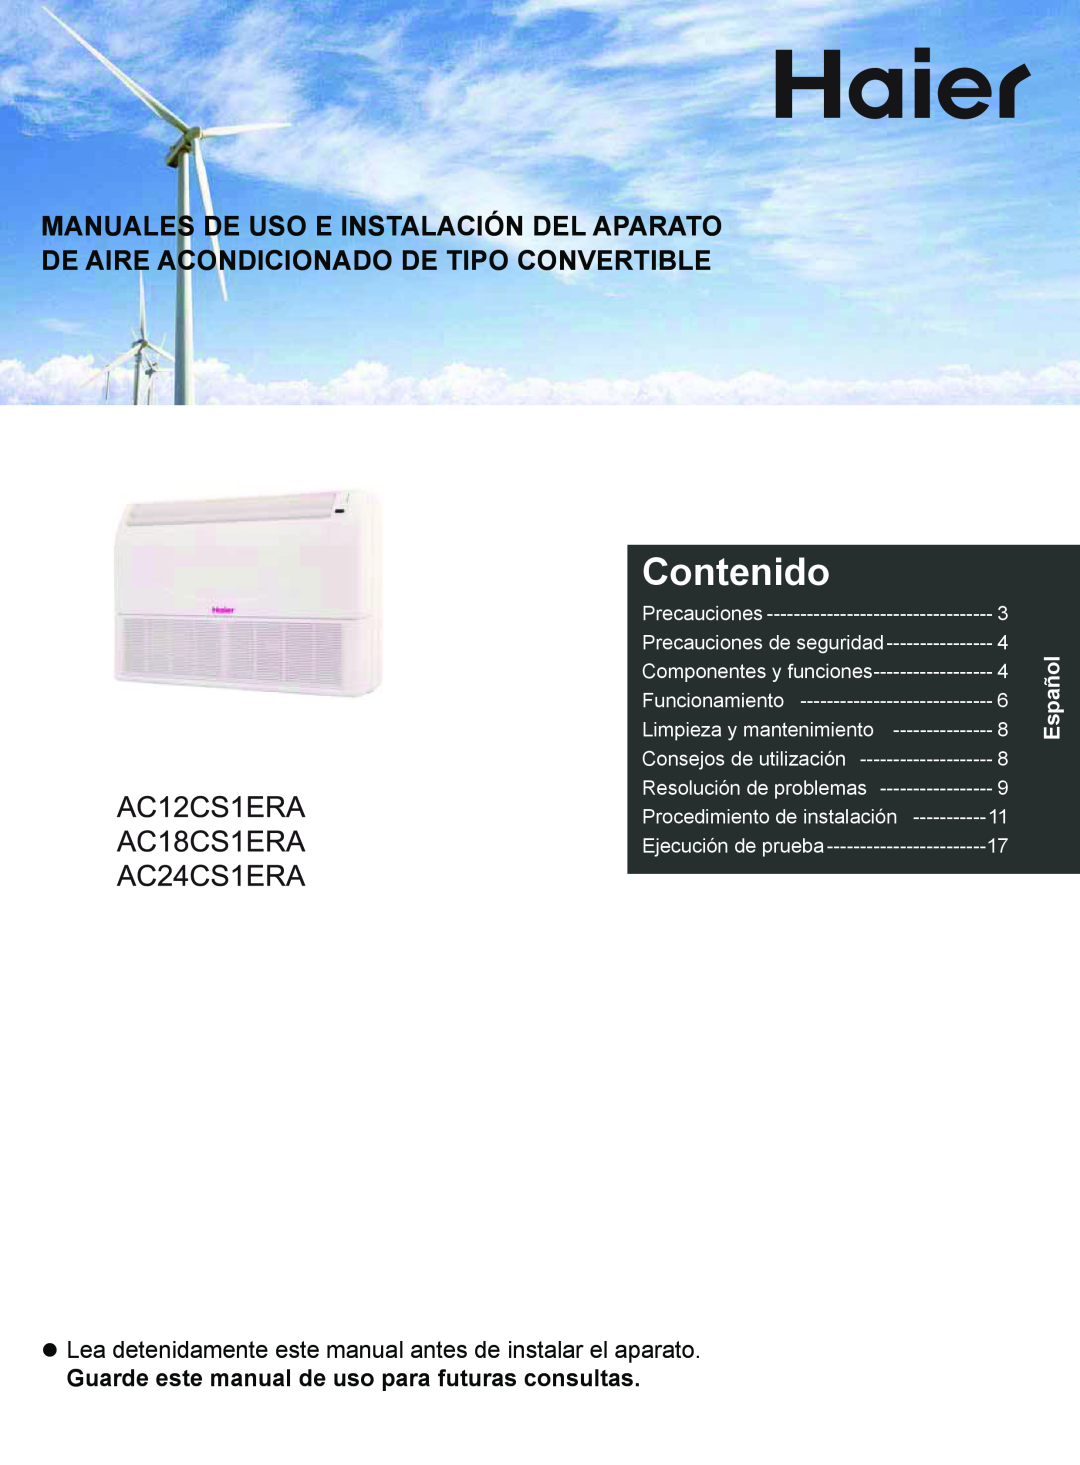 Haier AC12CS1ERA Contenido, Manuales De Uso E Instalación Del Aparato, De Aire Acondicionado De Tipo Convertible, Español 